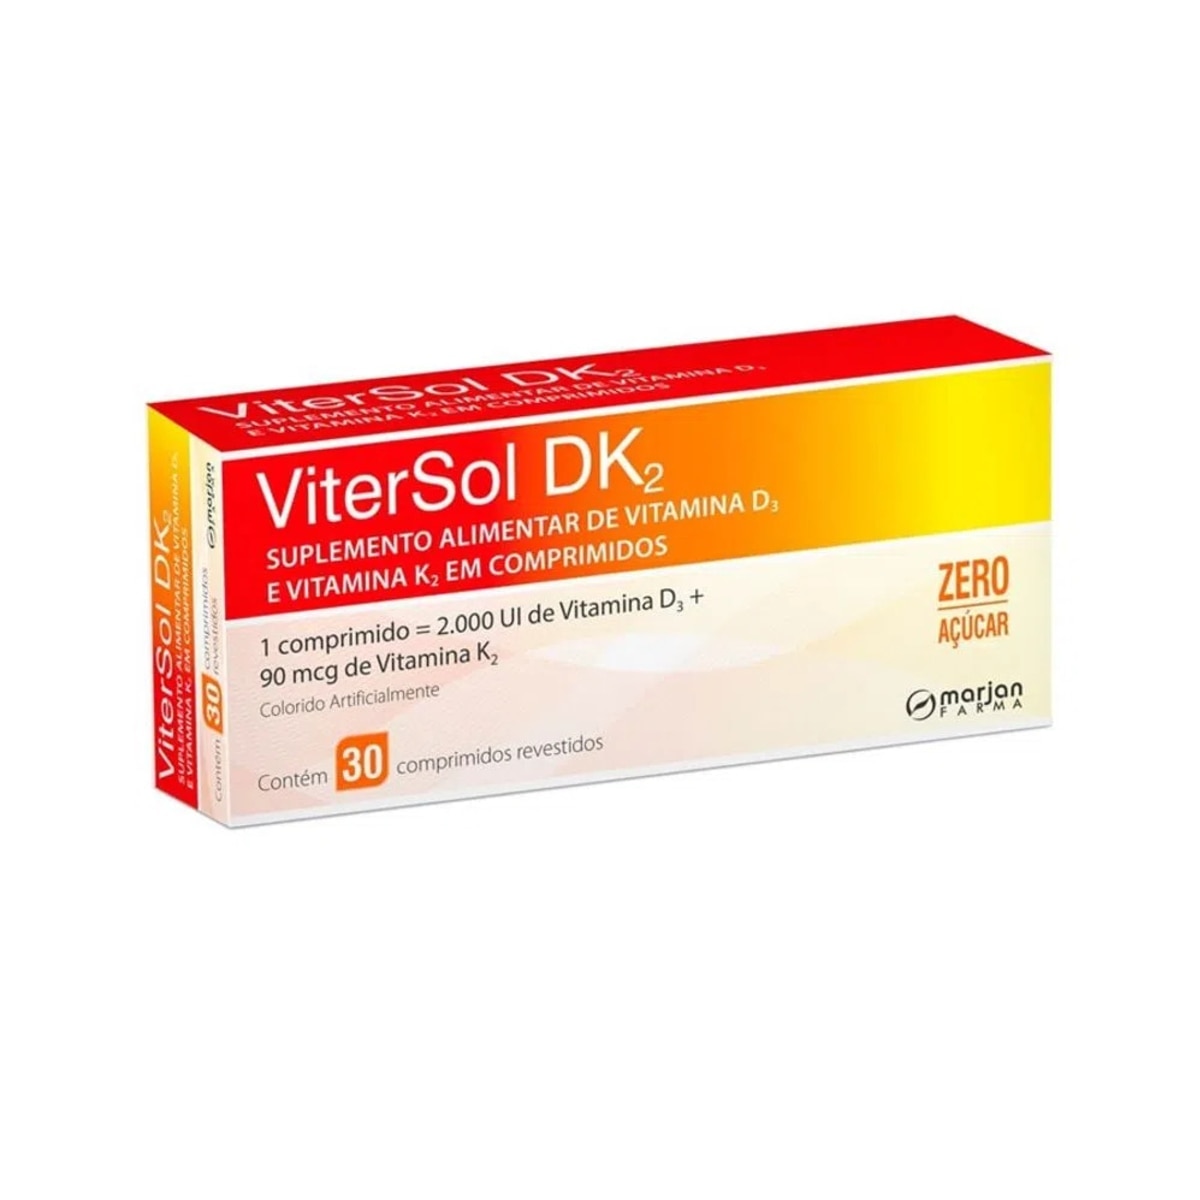 Vitersol DK2 30 Comprimidos Revestidos